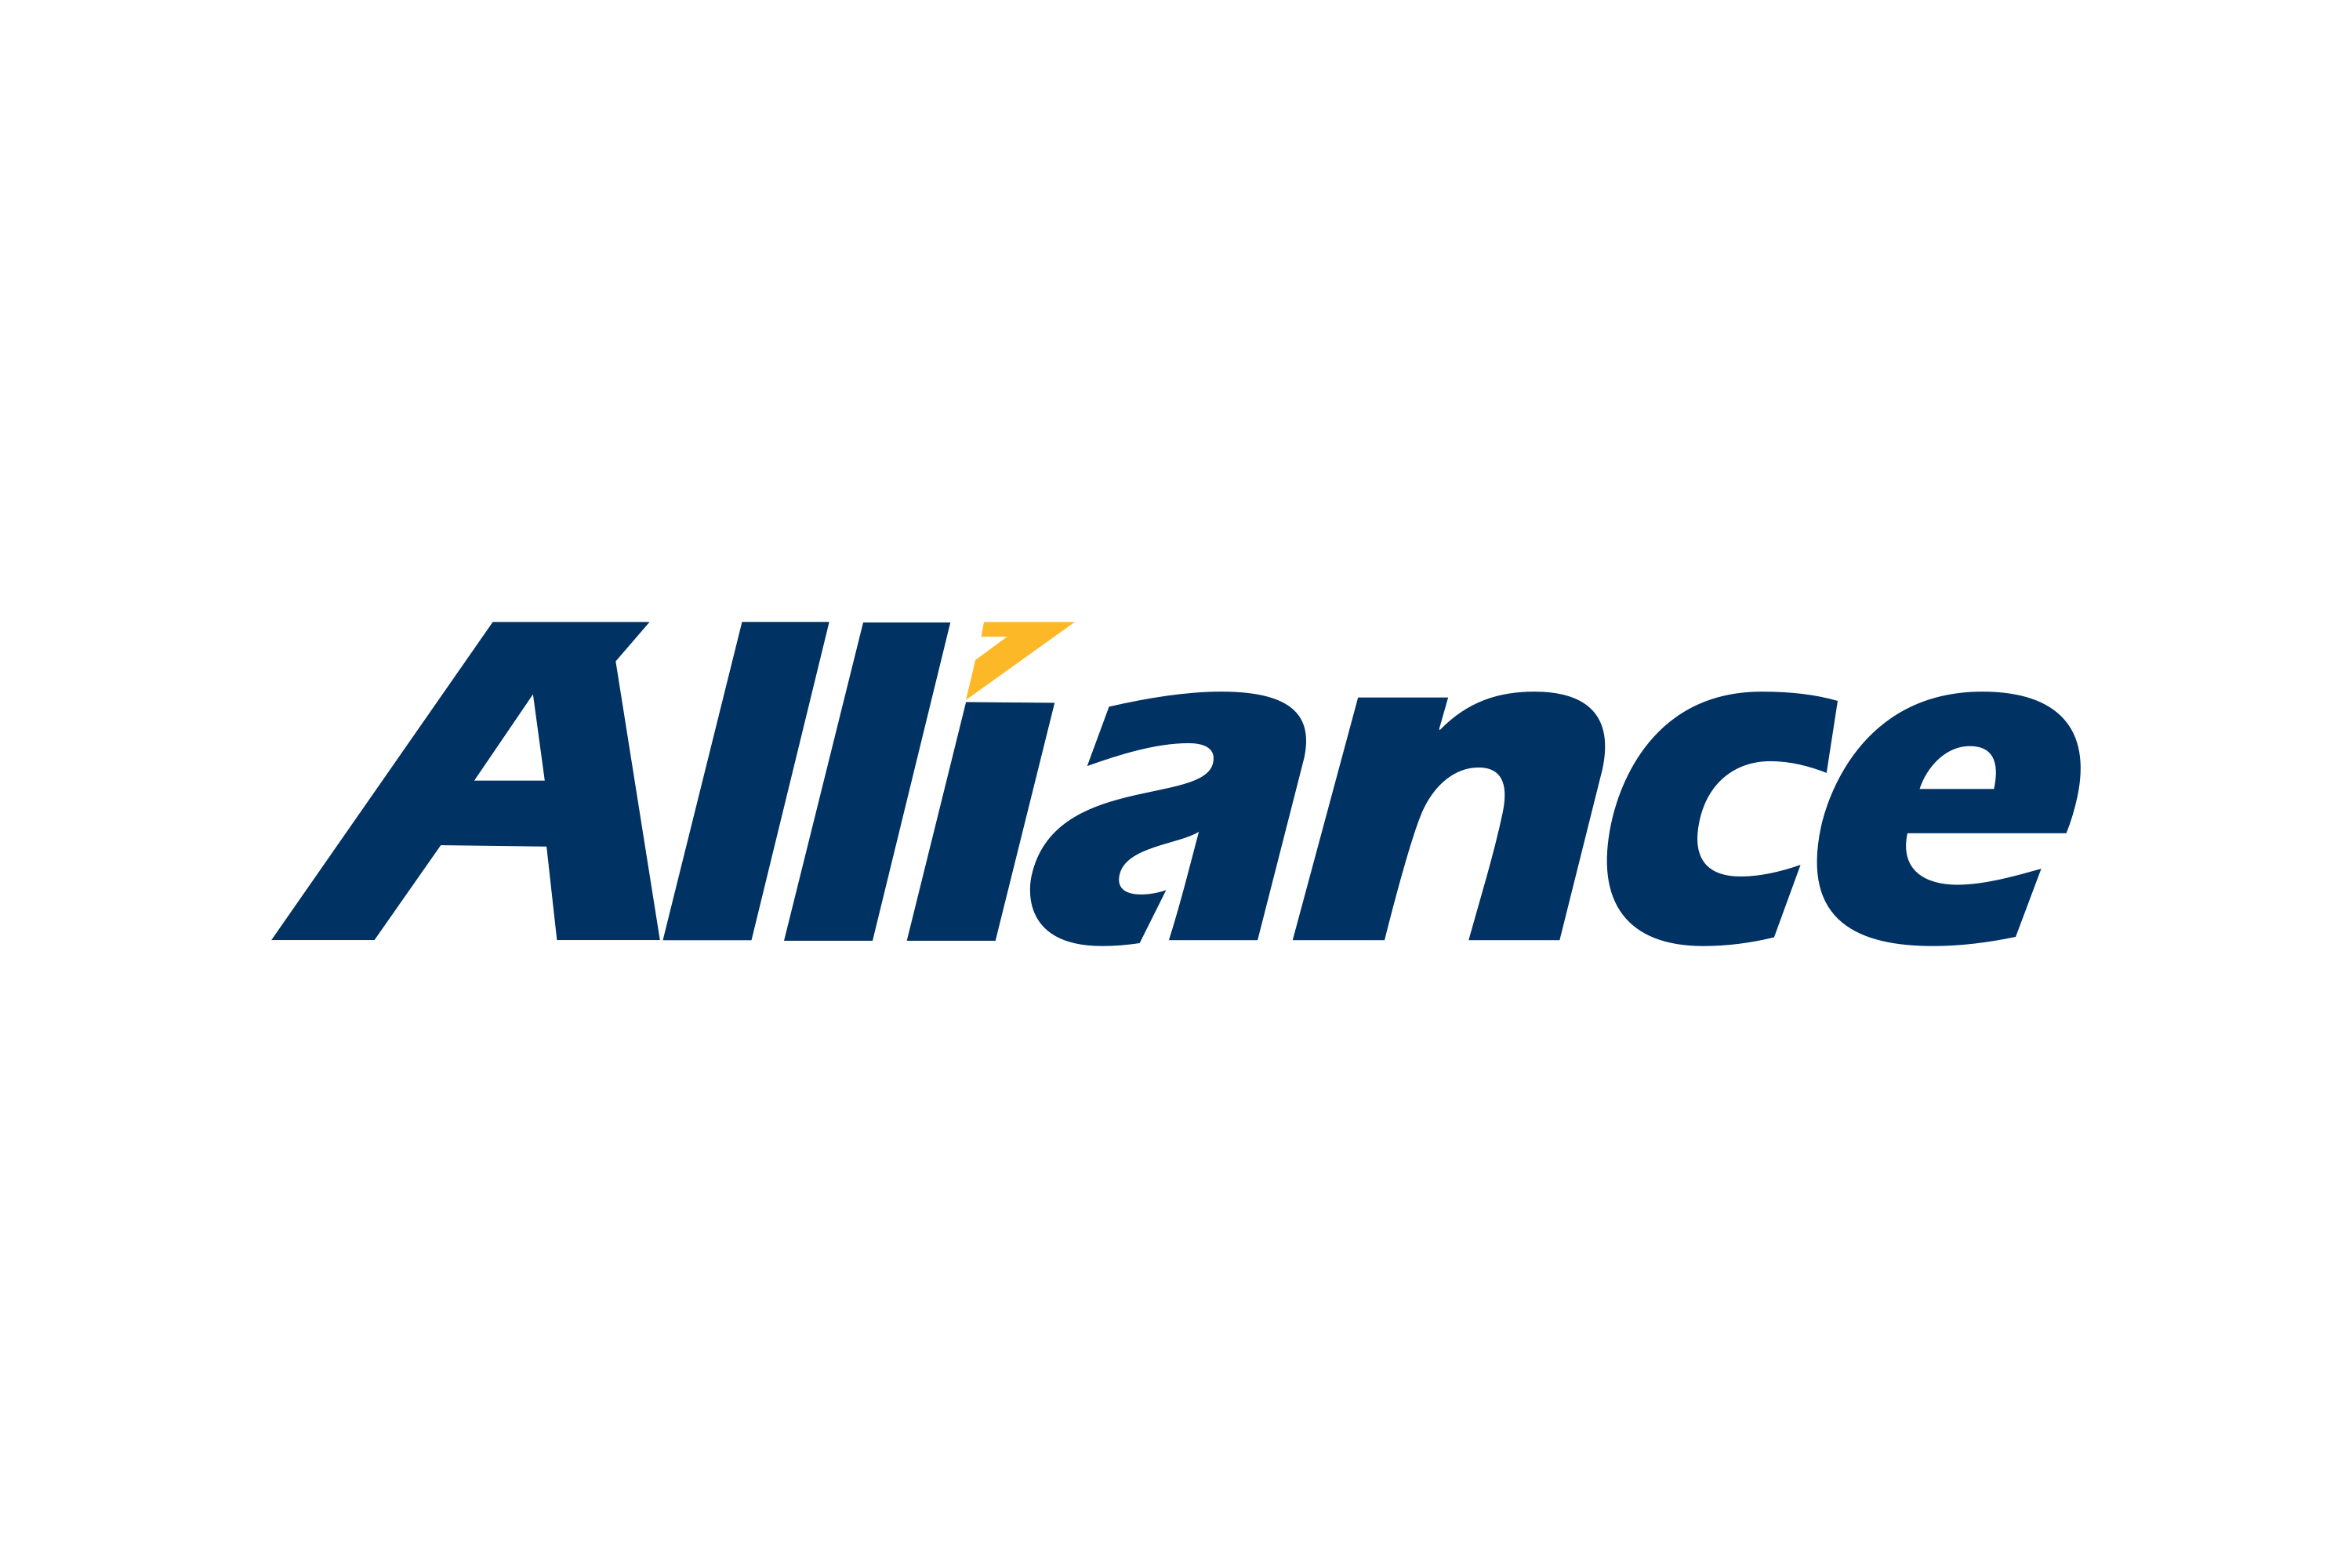 The alliance logo dota 2 фото 89